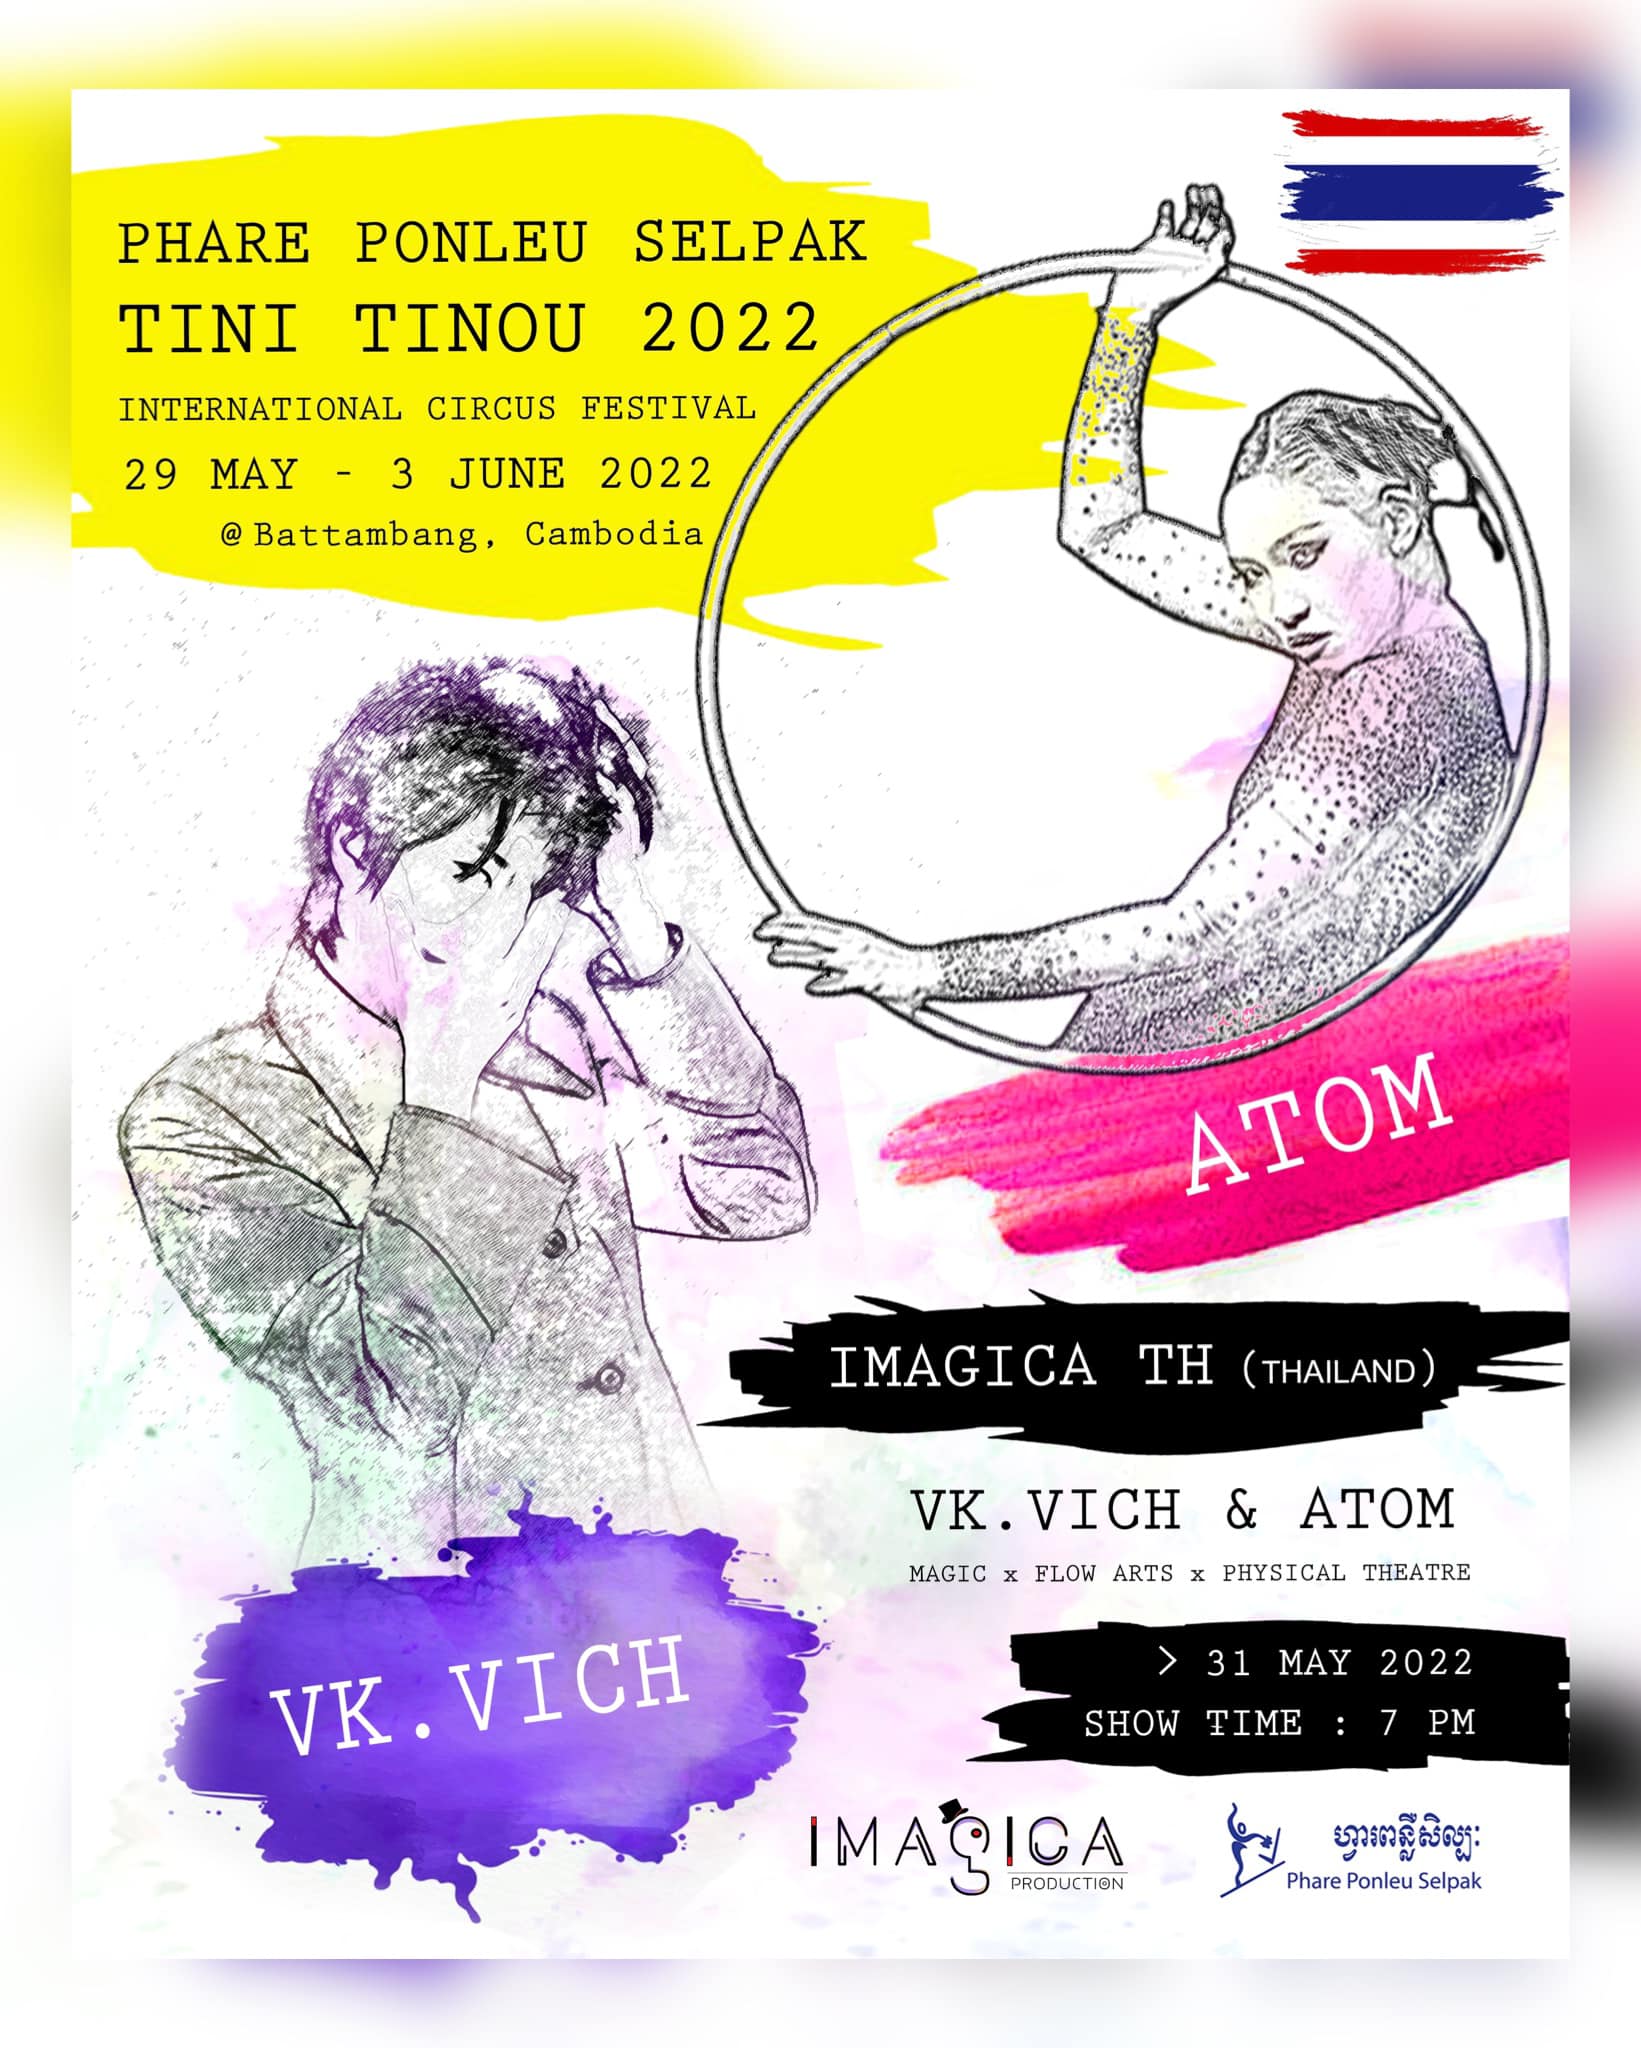 VK.Vich Vichayut Kanungchoti วิชยุตม์ คนึงโชติ มายากล รับแสดงมายากล Magic Class รับสอนมายากล มายากลเวที การแสดง Stage Magic แสดงวันเด็ก วันปีใหม่ World International Circus 2022 Festival Phare Ponleu Selpak Tini Tinou